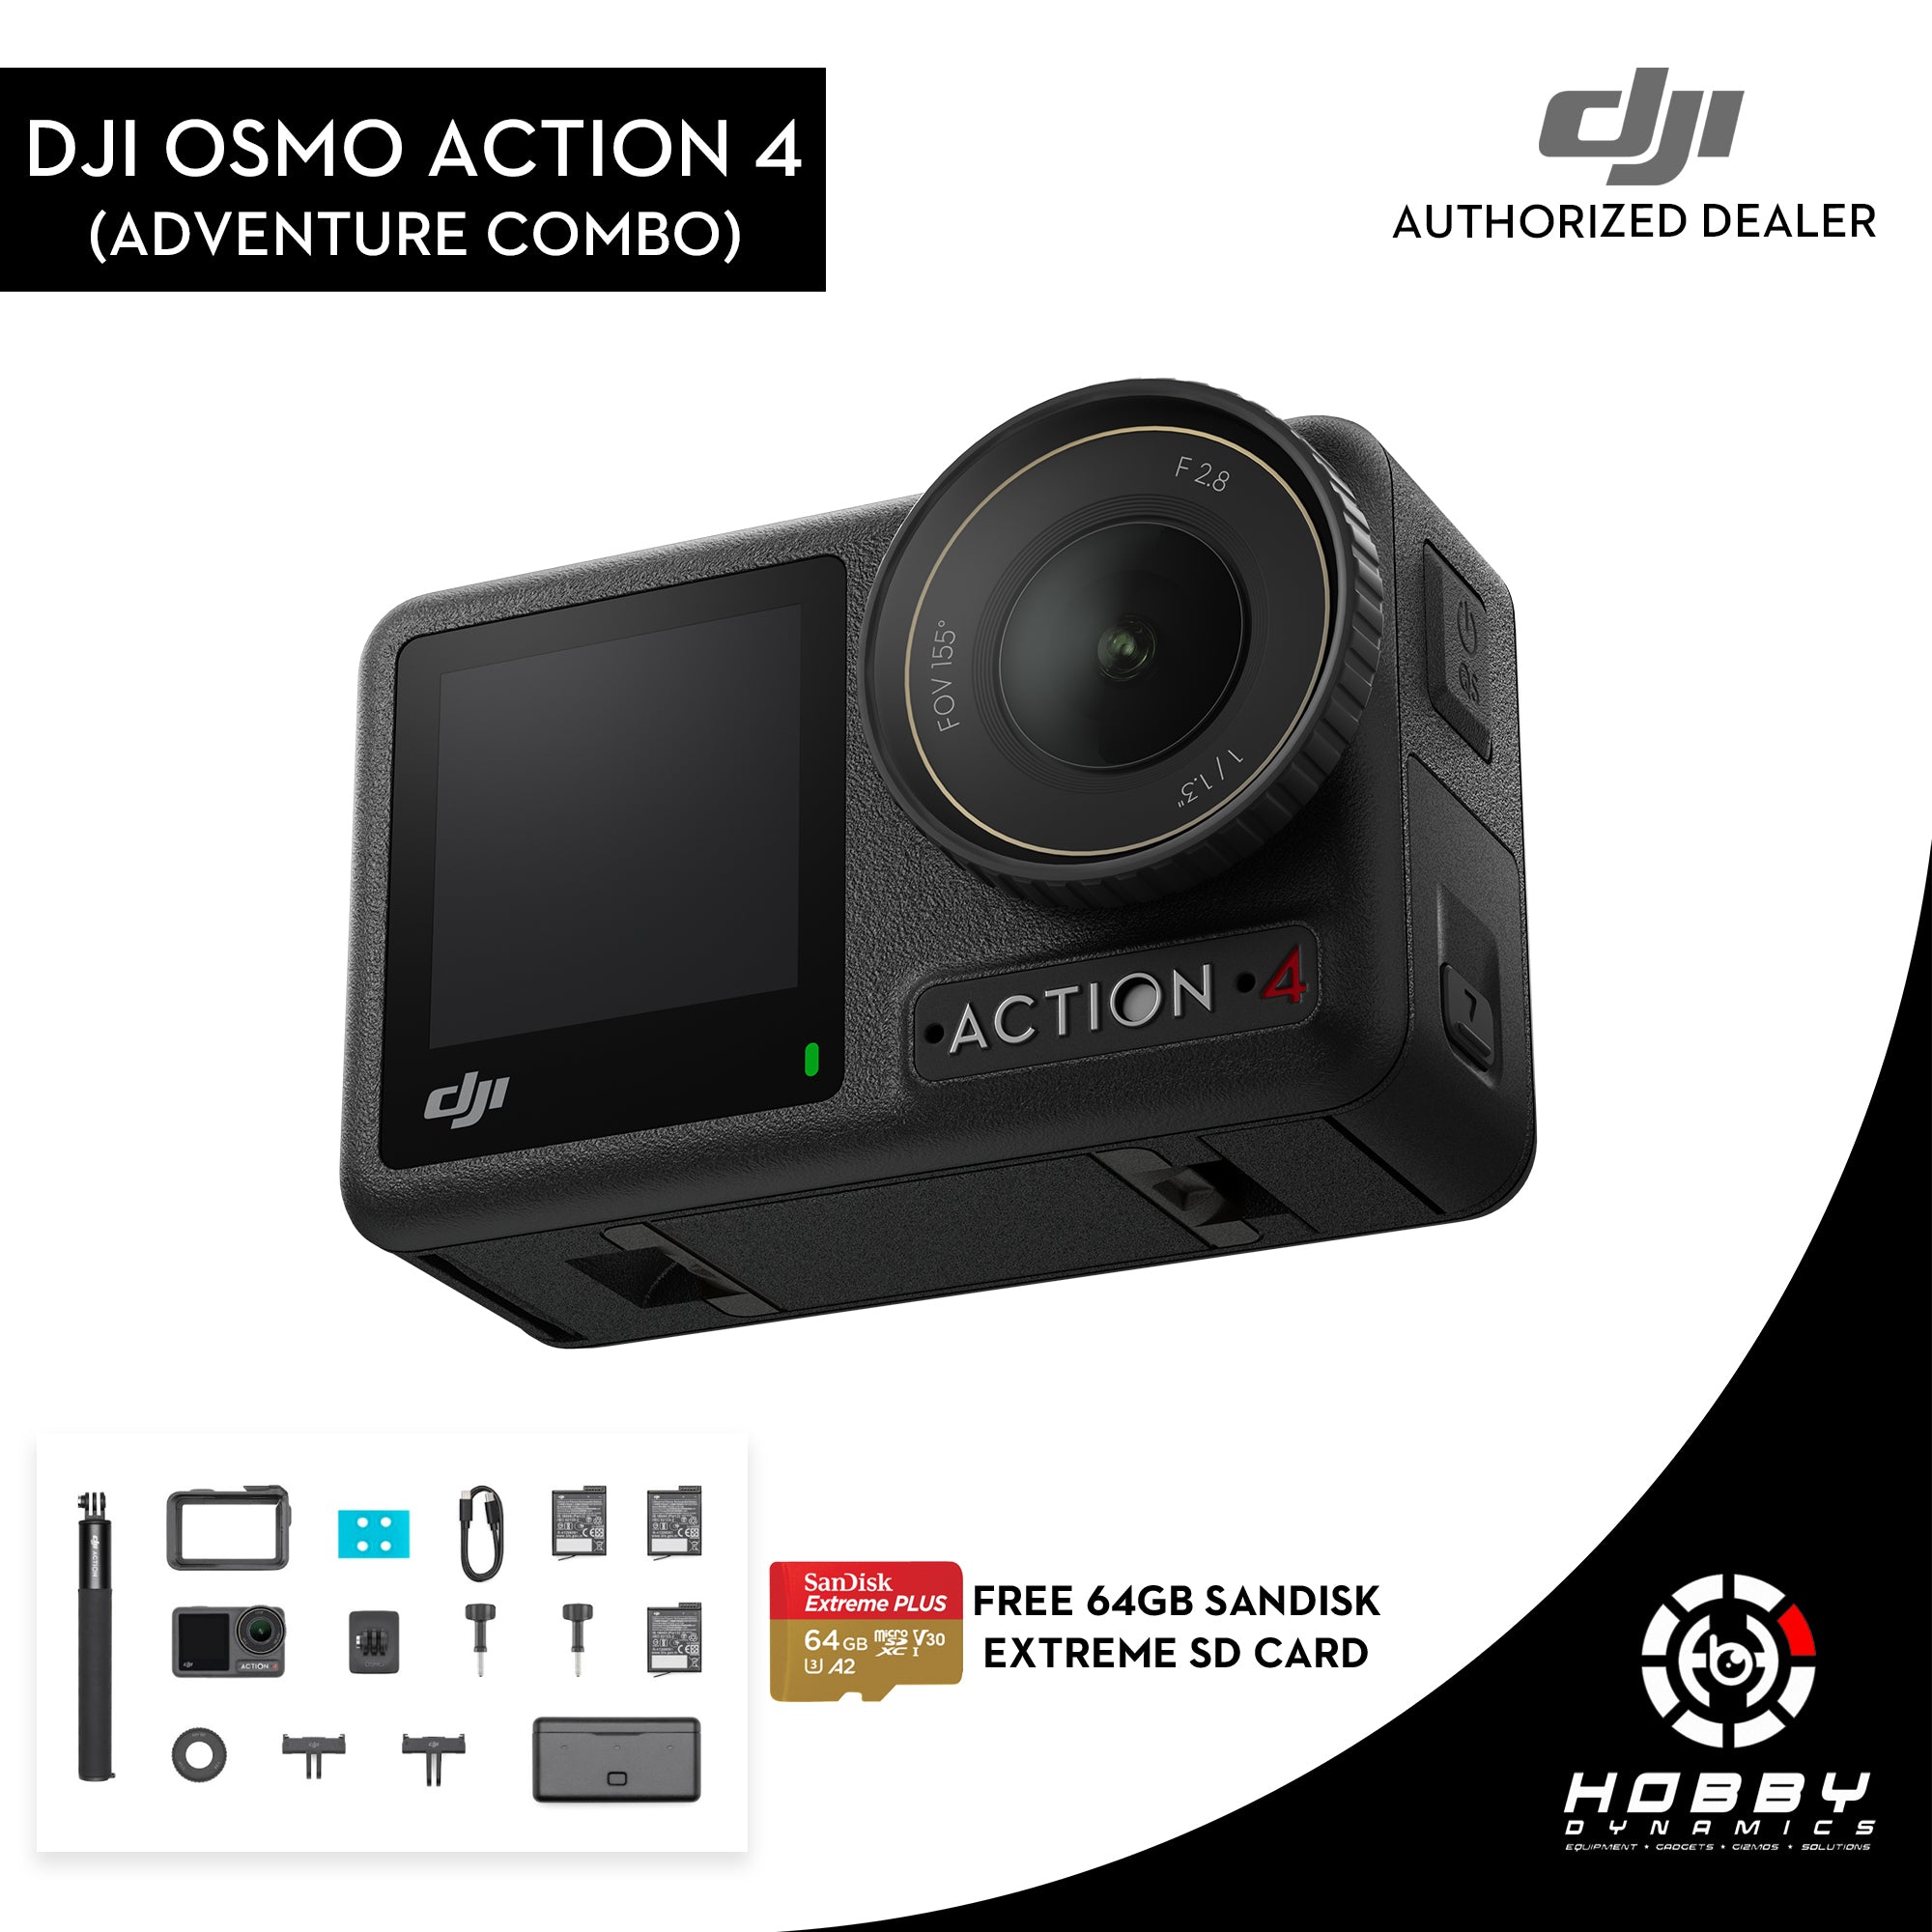 DJI DJI Osmo Action 4 Adventure Combo buy online at Modellsport